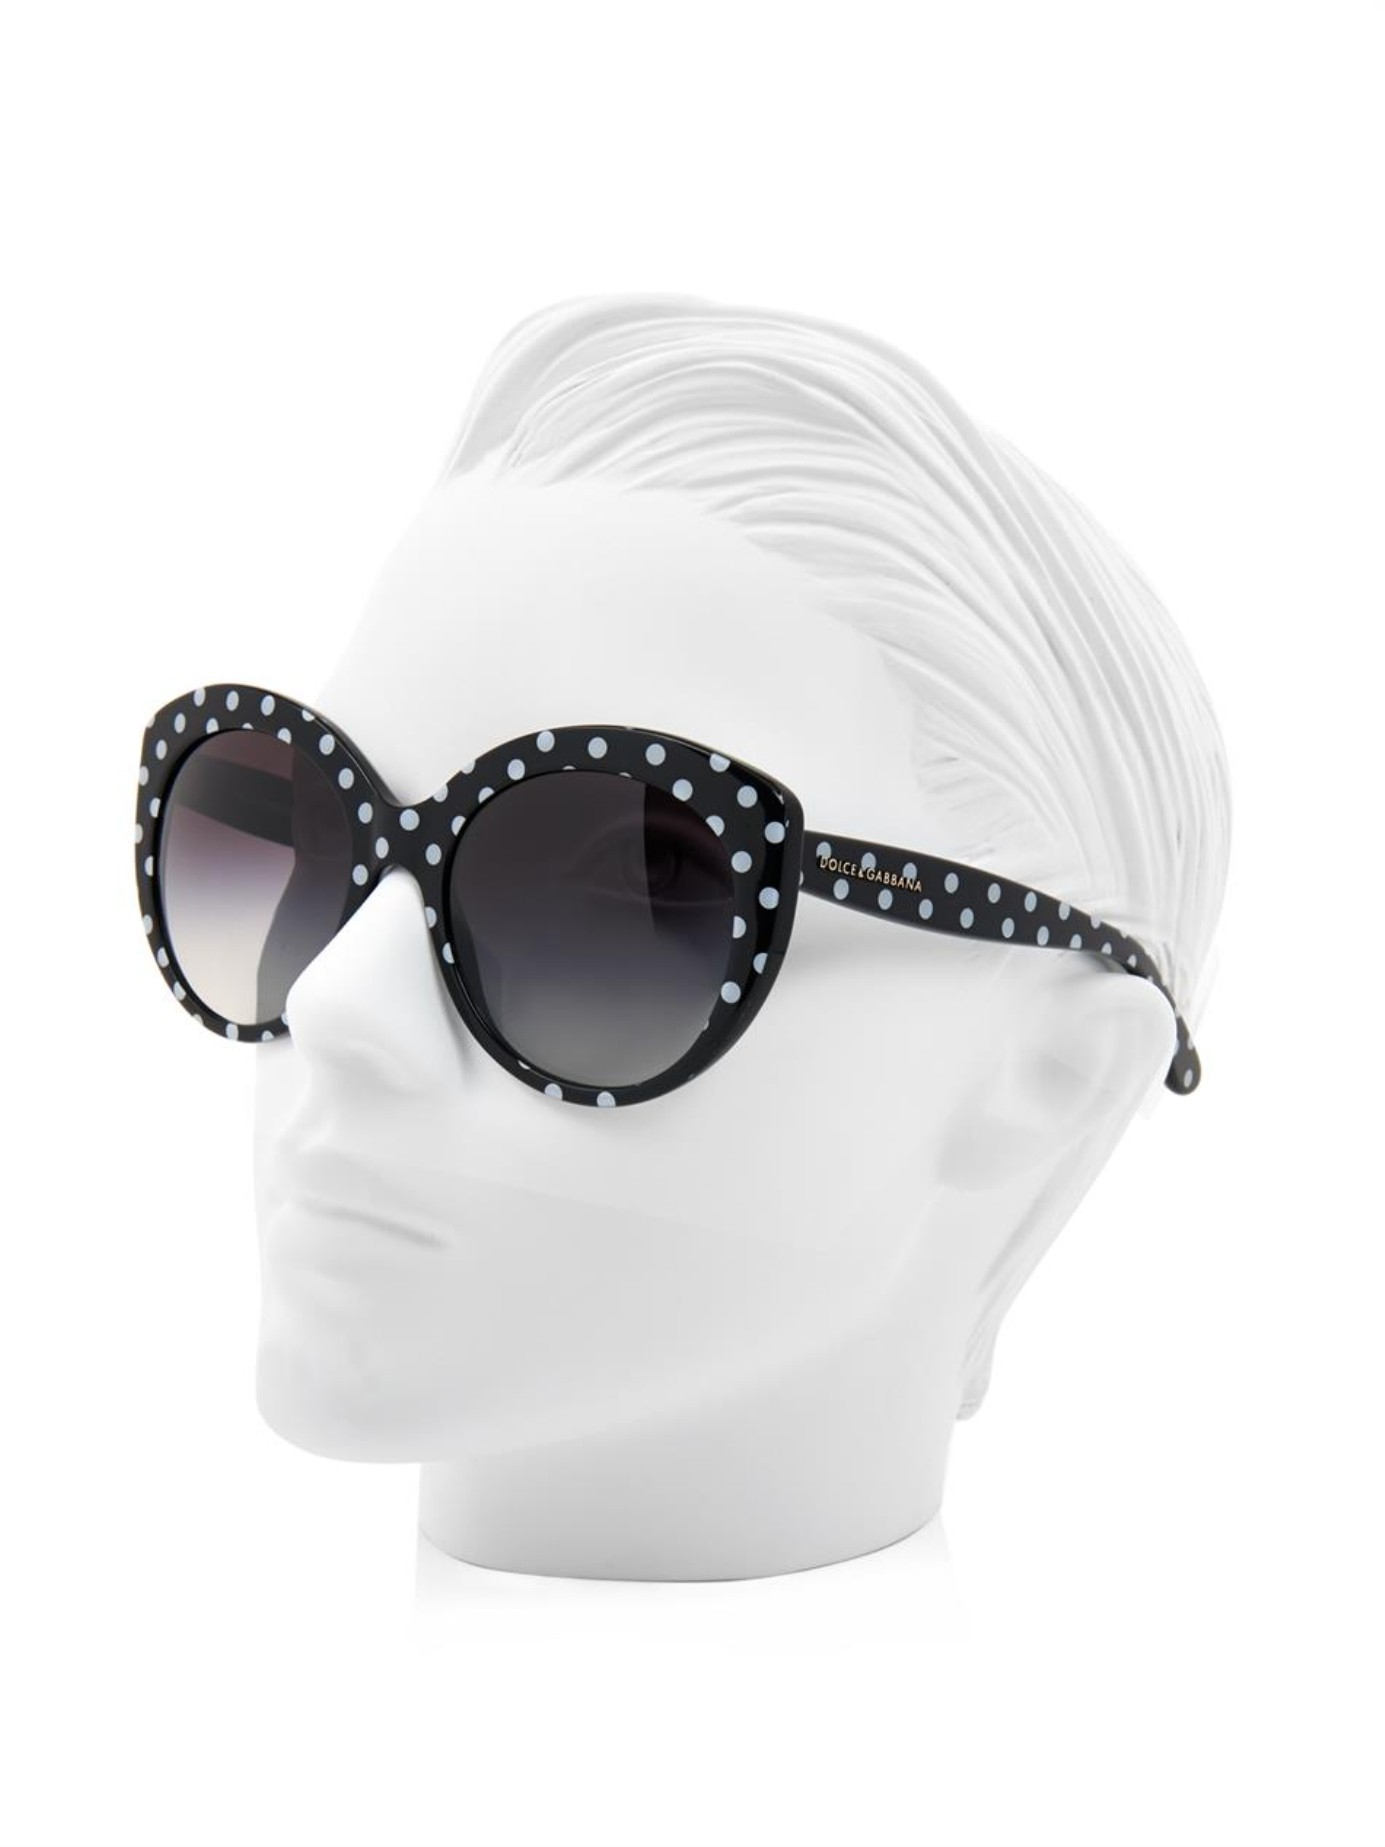 Dolce & Gabbana Polka-Dot Round-Framed Sunglasses in Black | Lyst